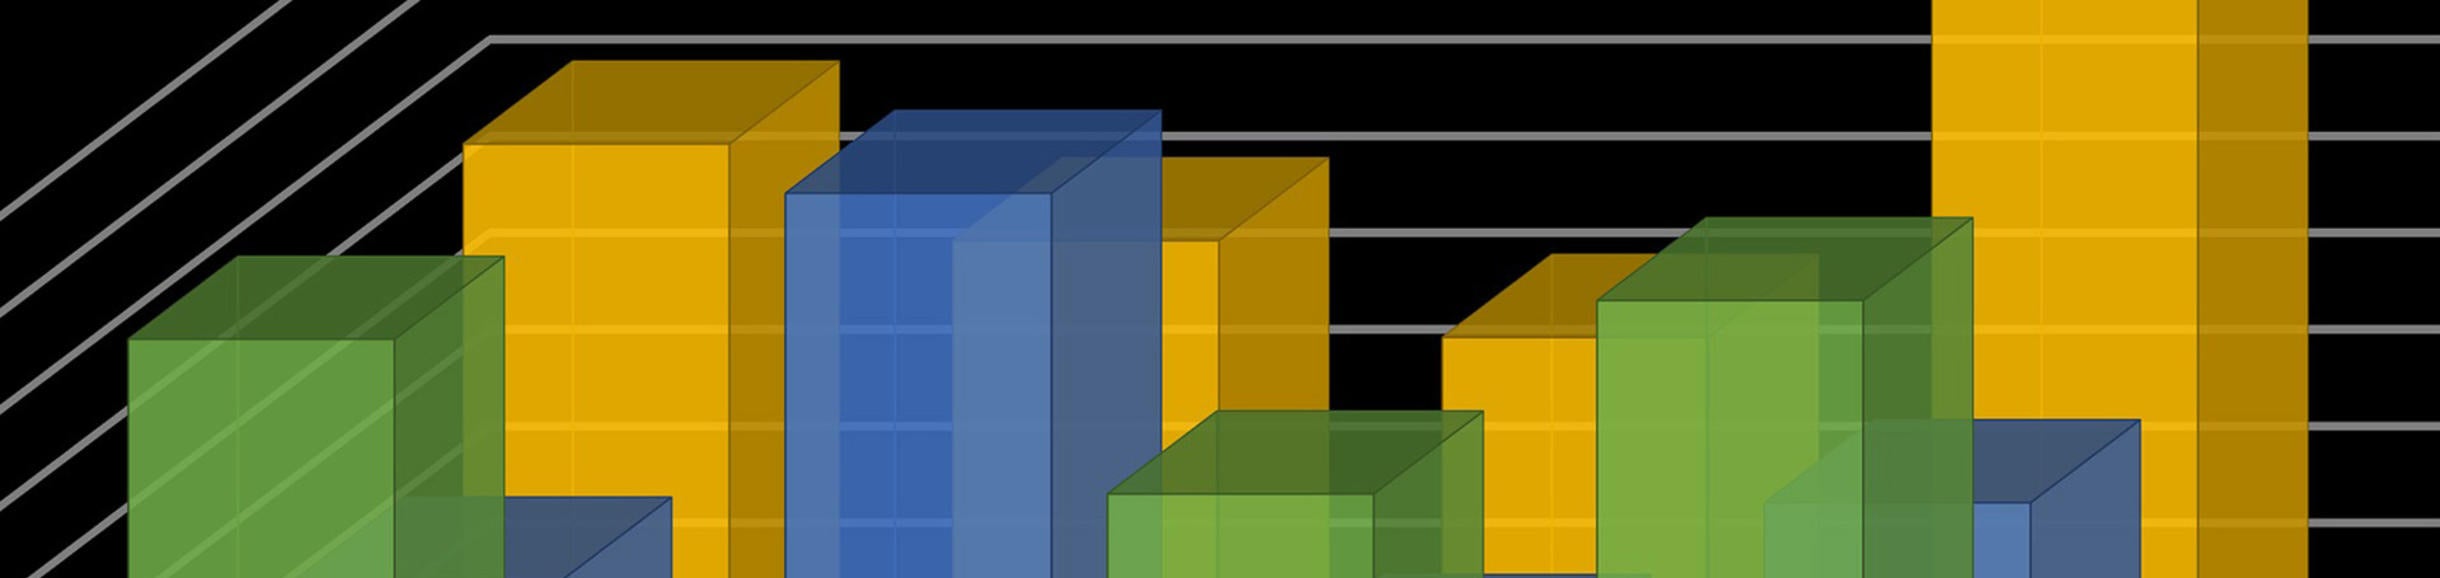 Statistical bar chart